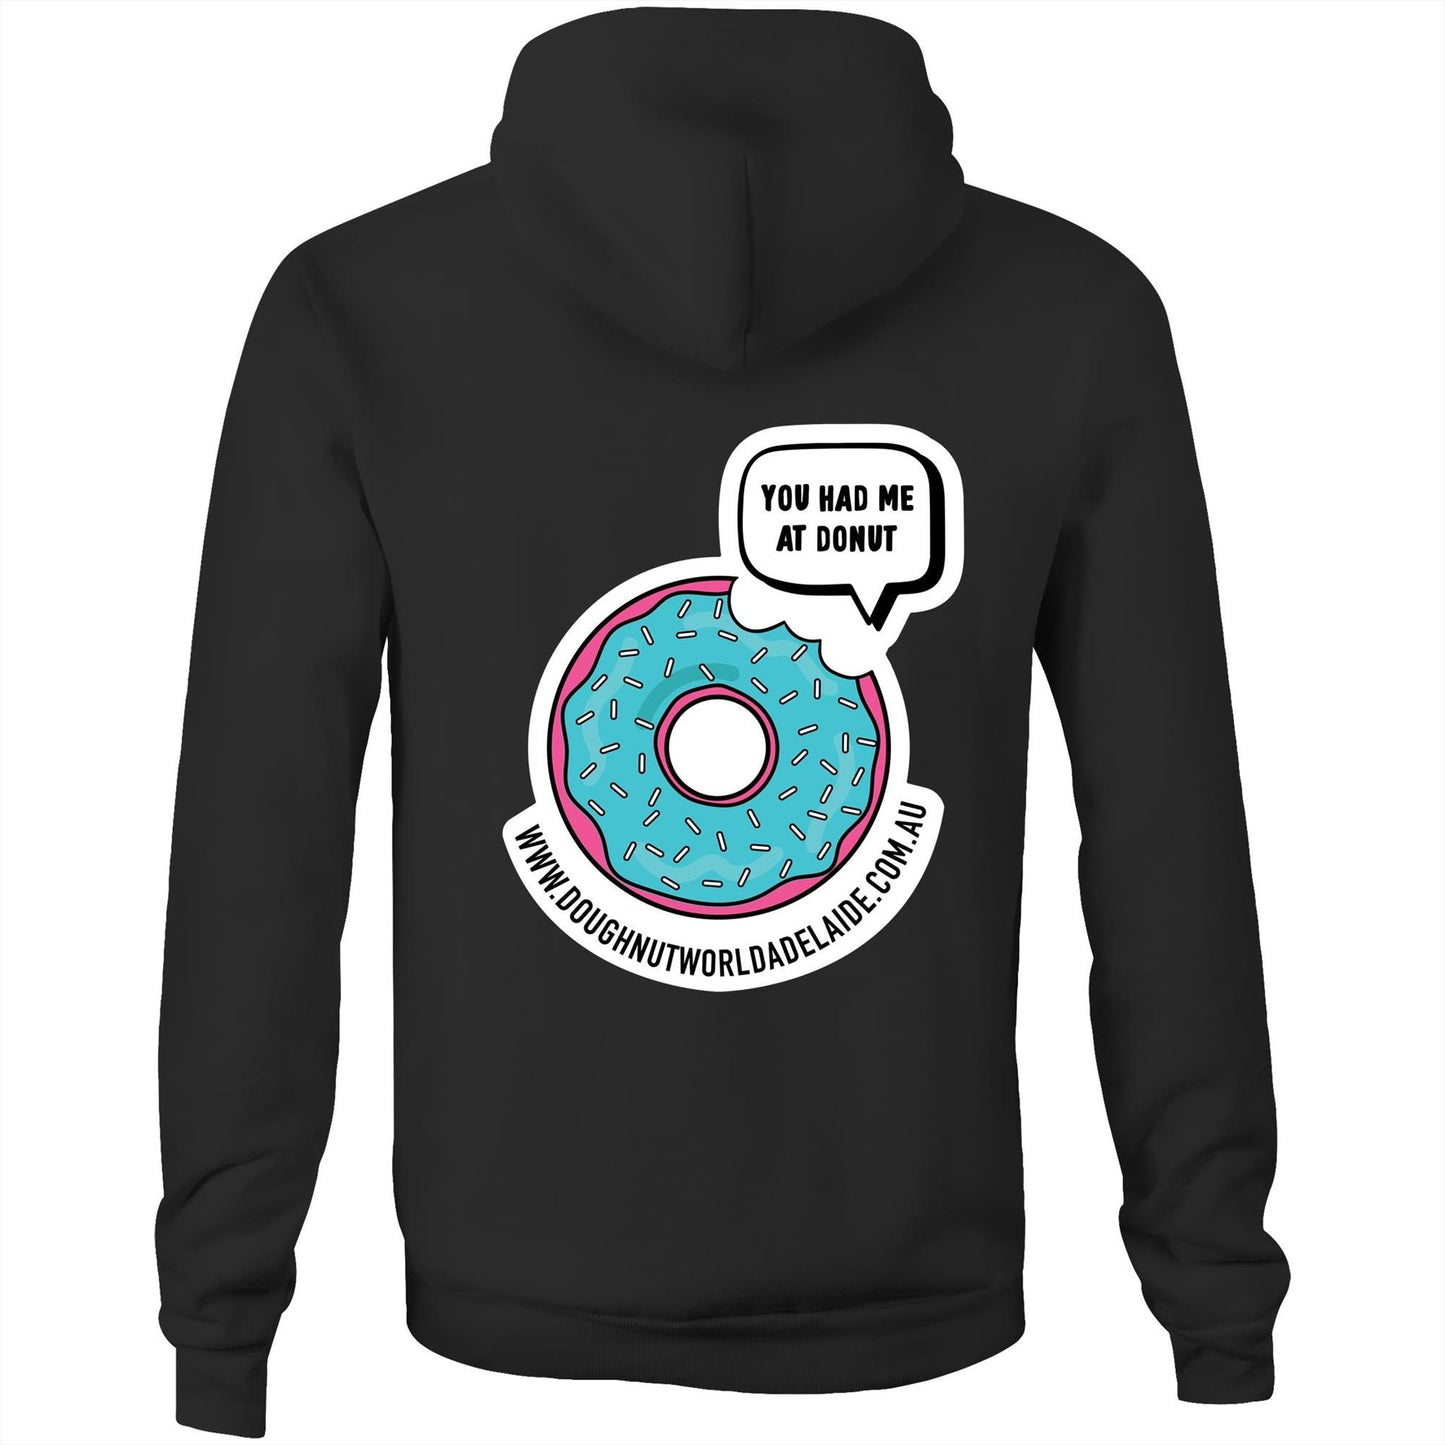 Doughnut World Logo front and back - Hoodie Sweatshirt